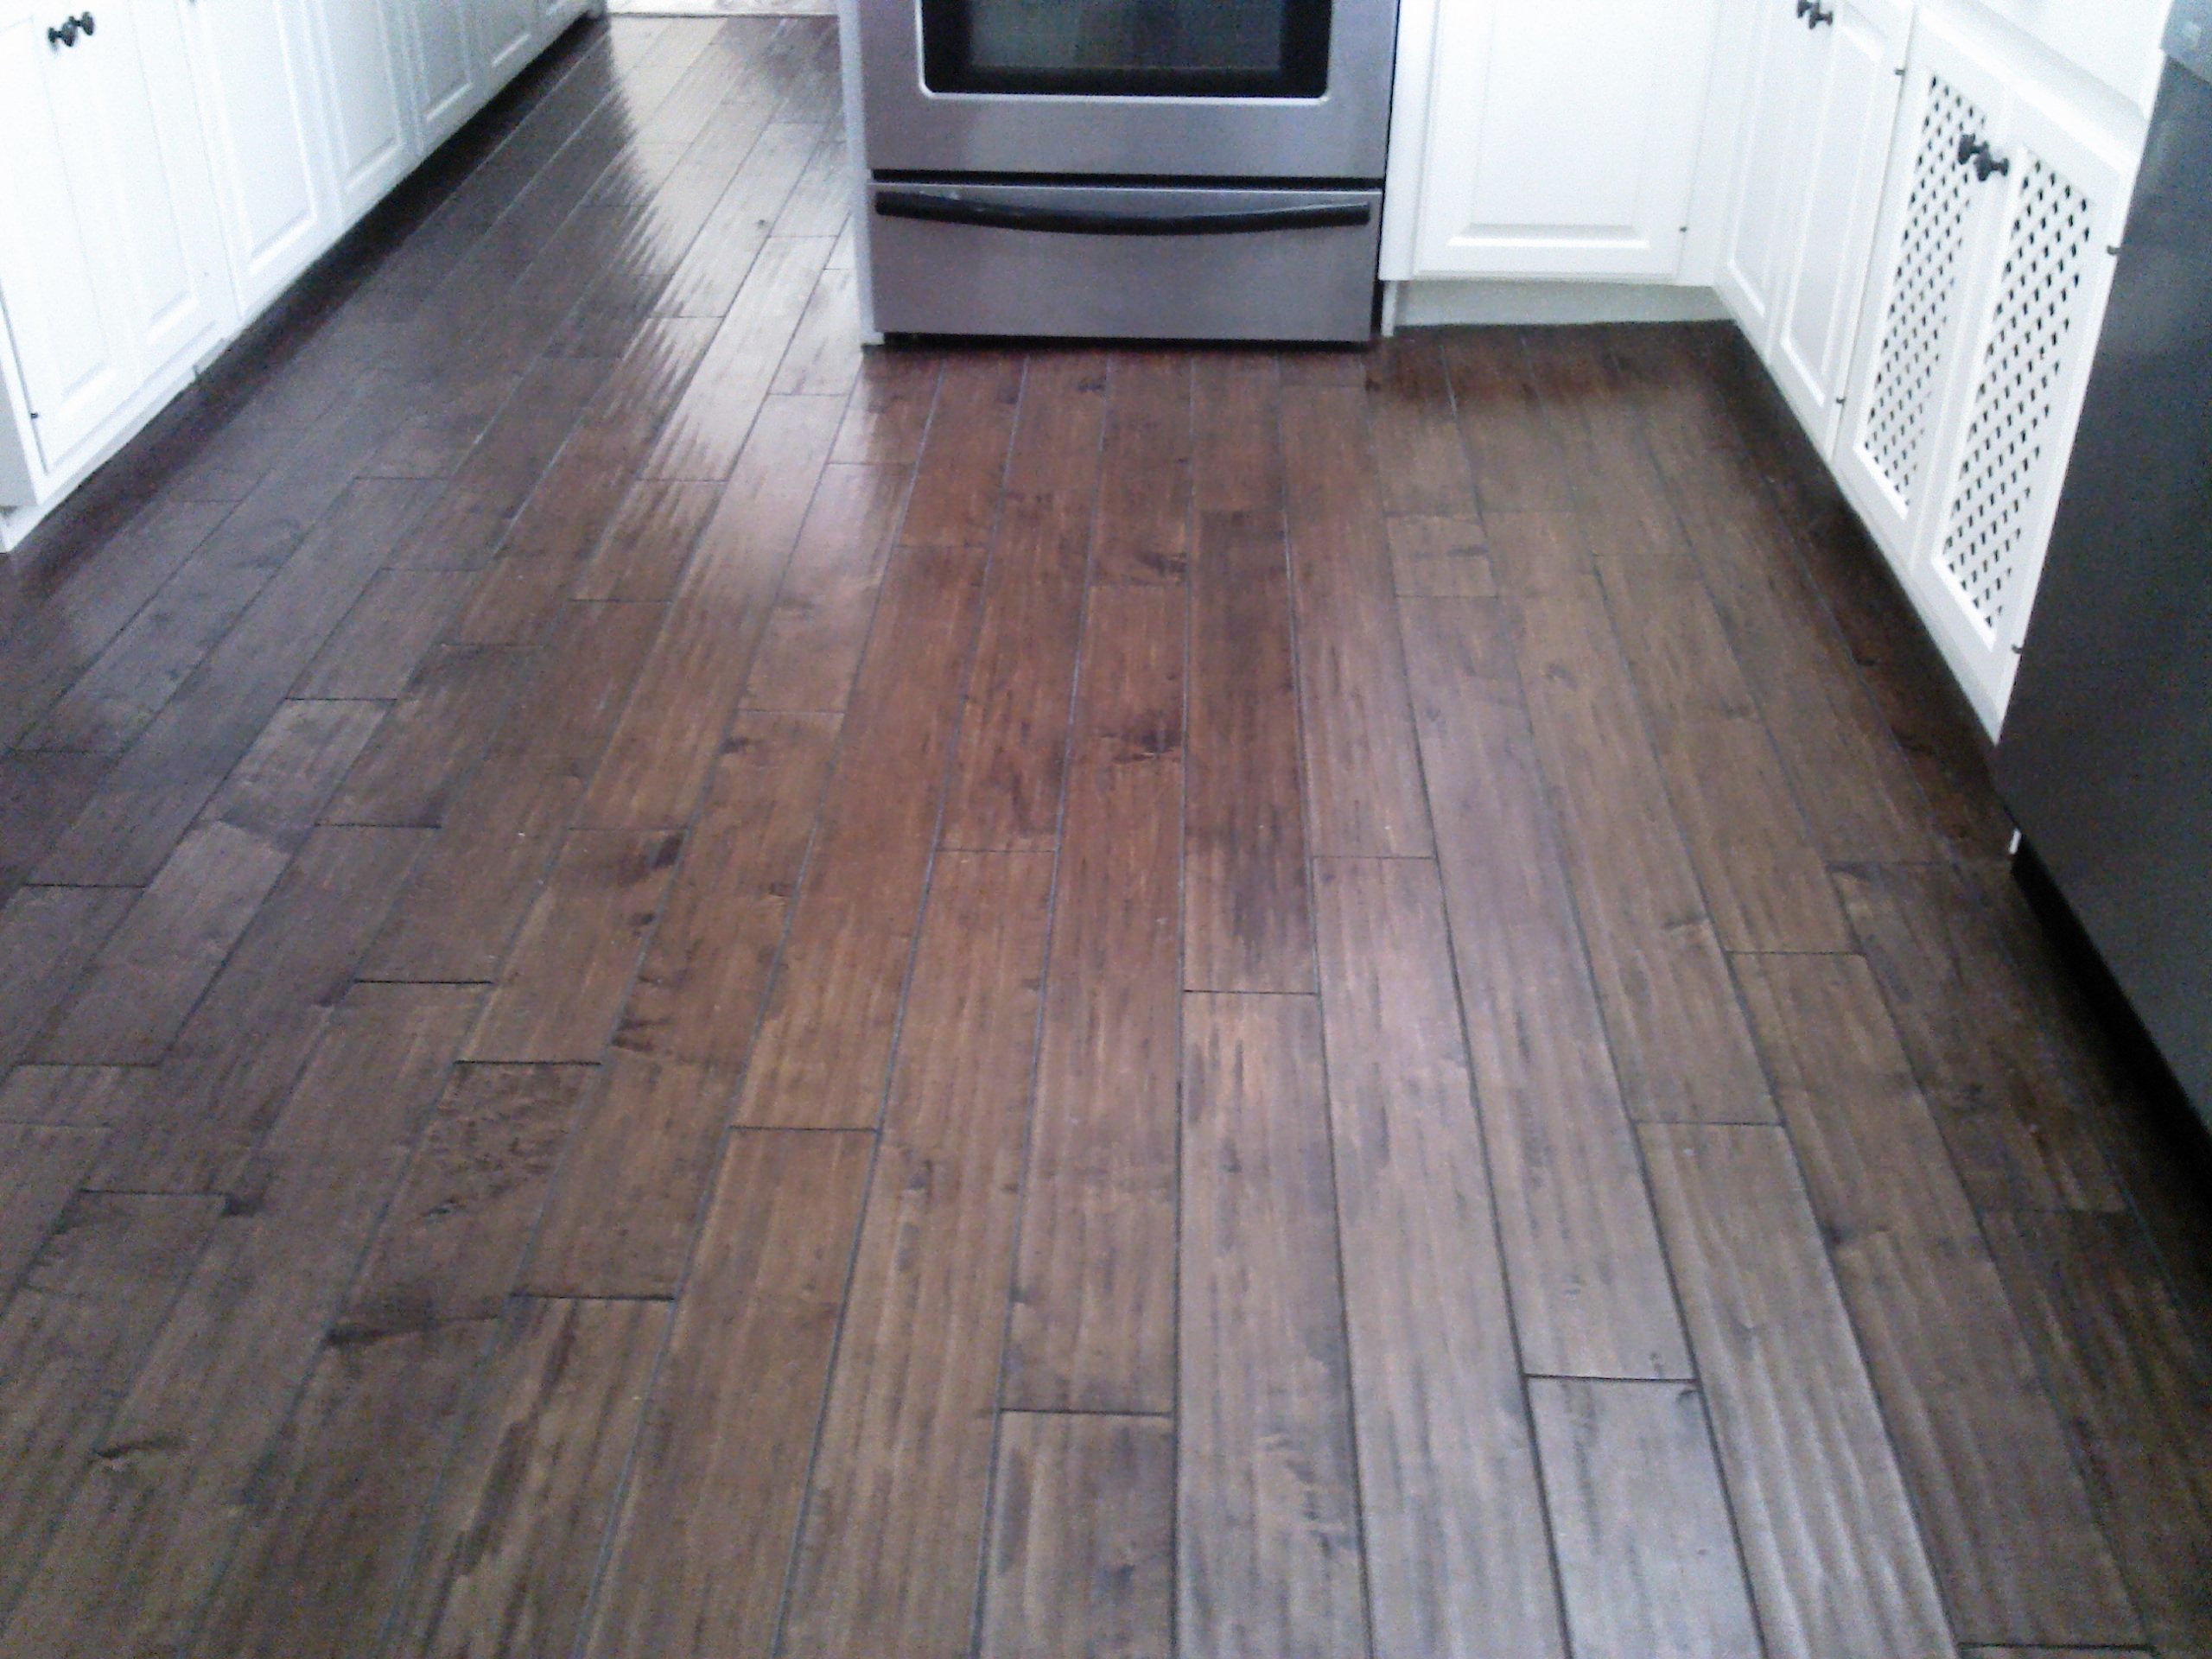 Laminate Wood Flooring In Kitchen, Wood Floor Vs Ceramic Tile In Kitchen